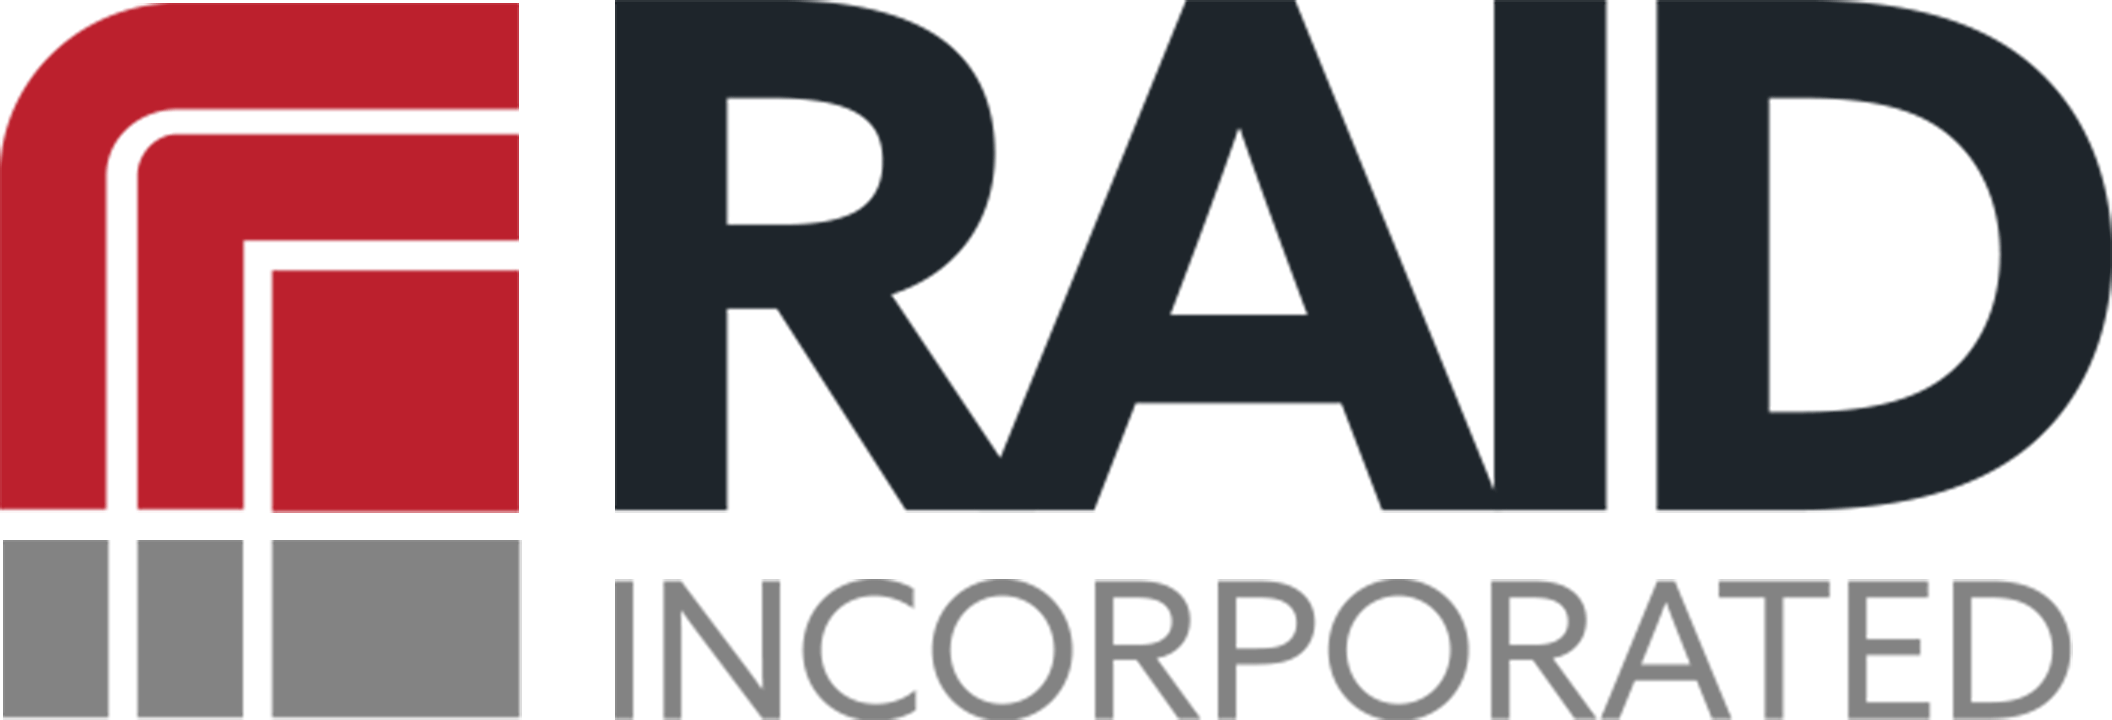 RAID Incorporated